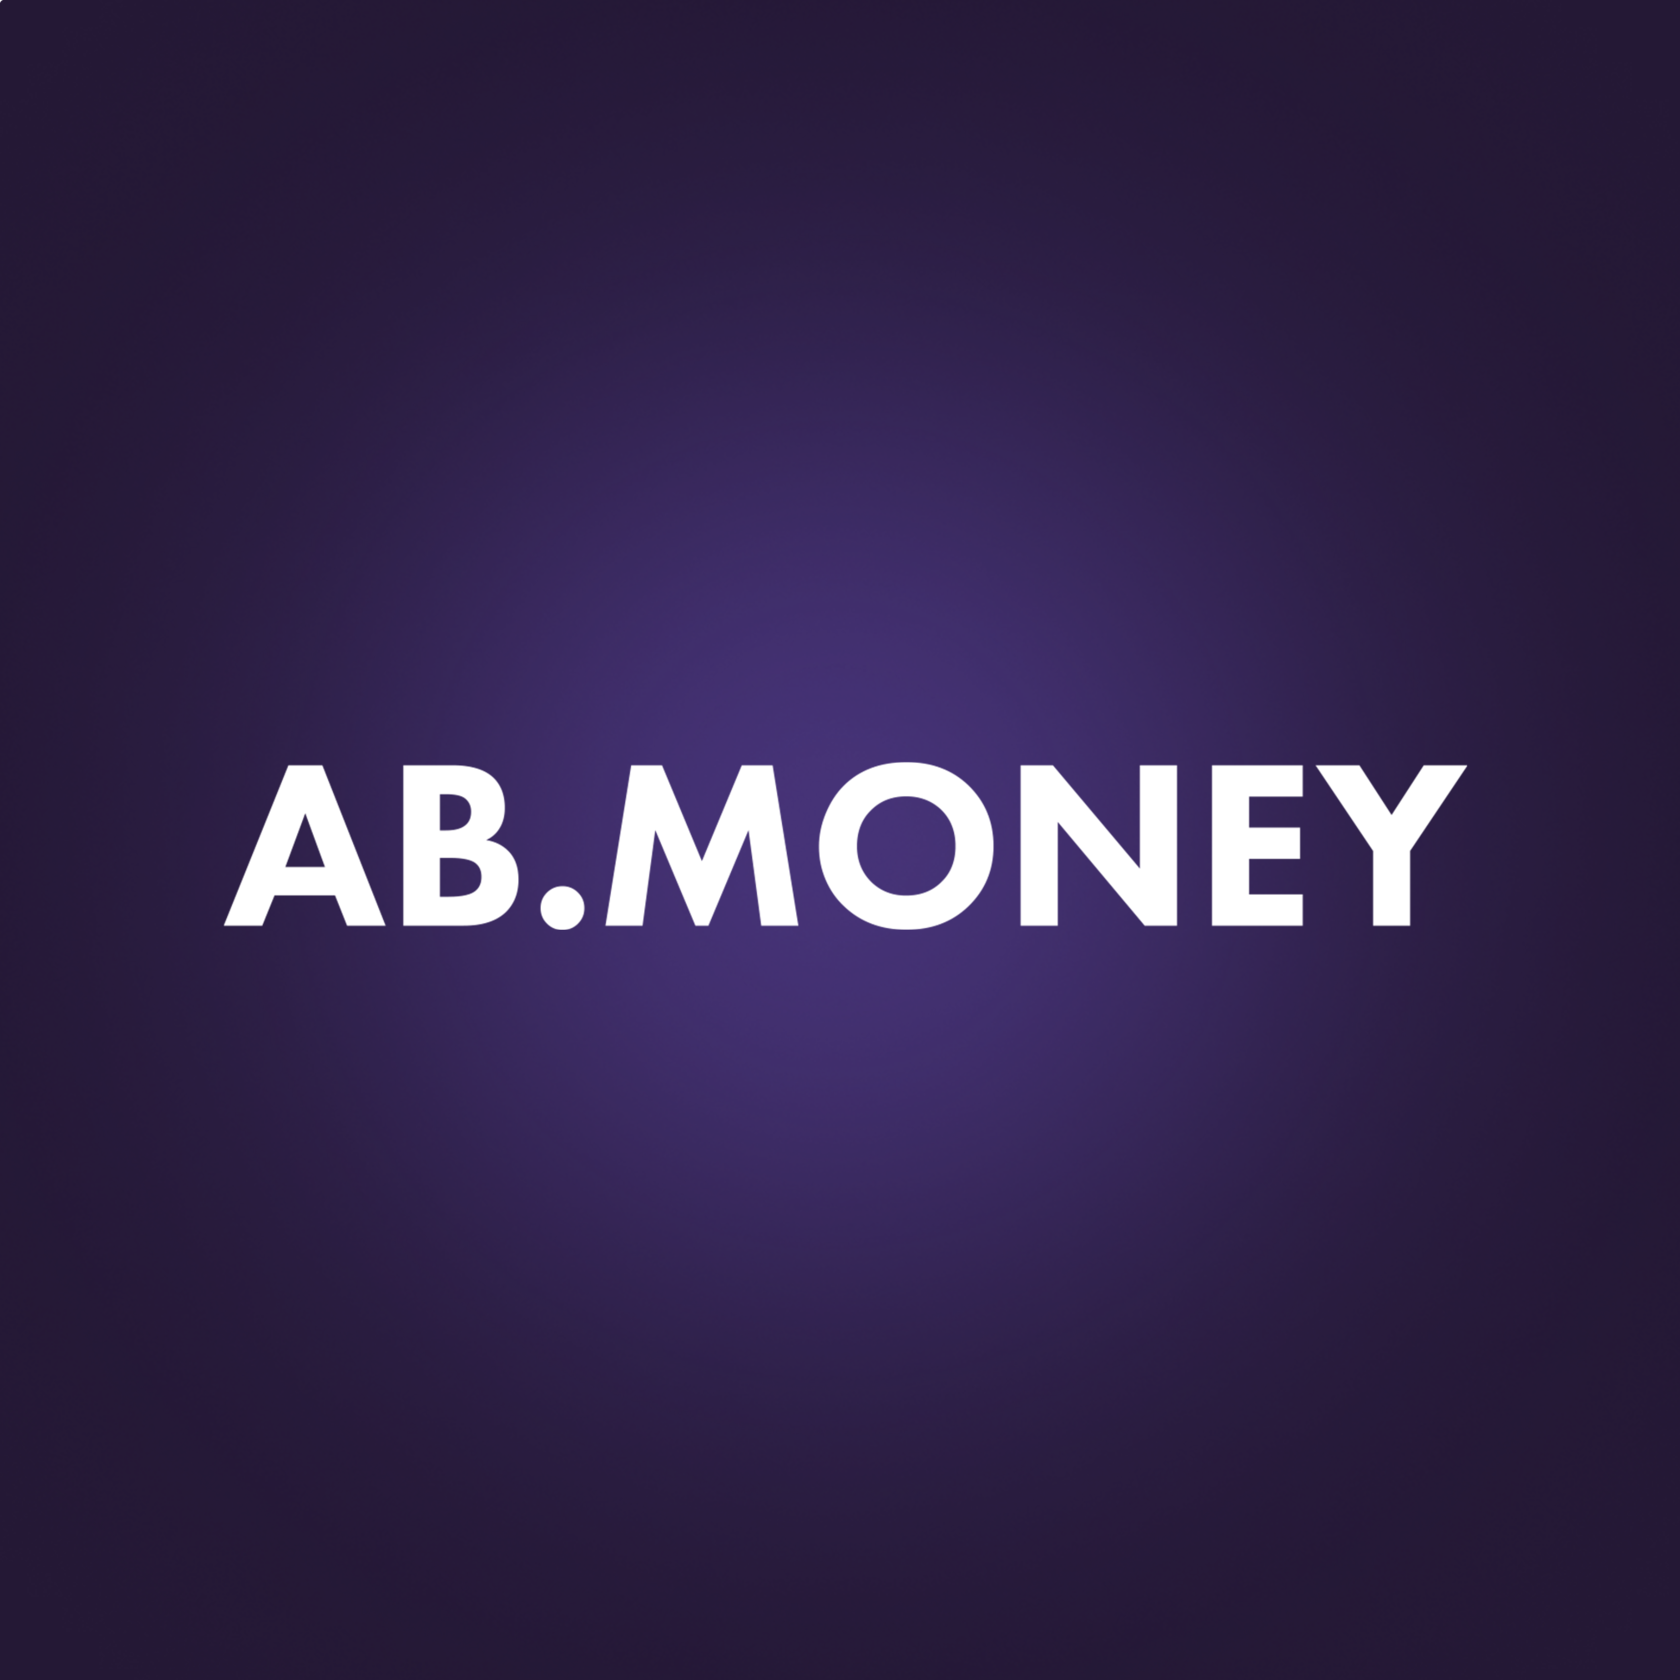 Ab money Белякова. Ab money медитации. Ab money приложение. Саша Белякова ab money. Саша беляков медитация